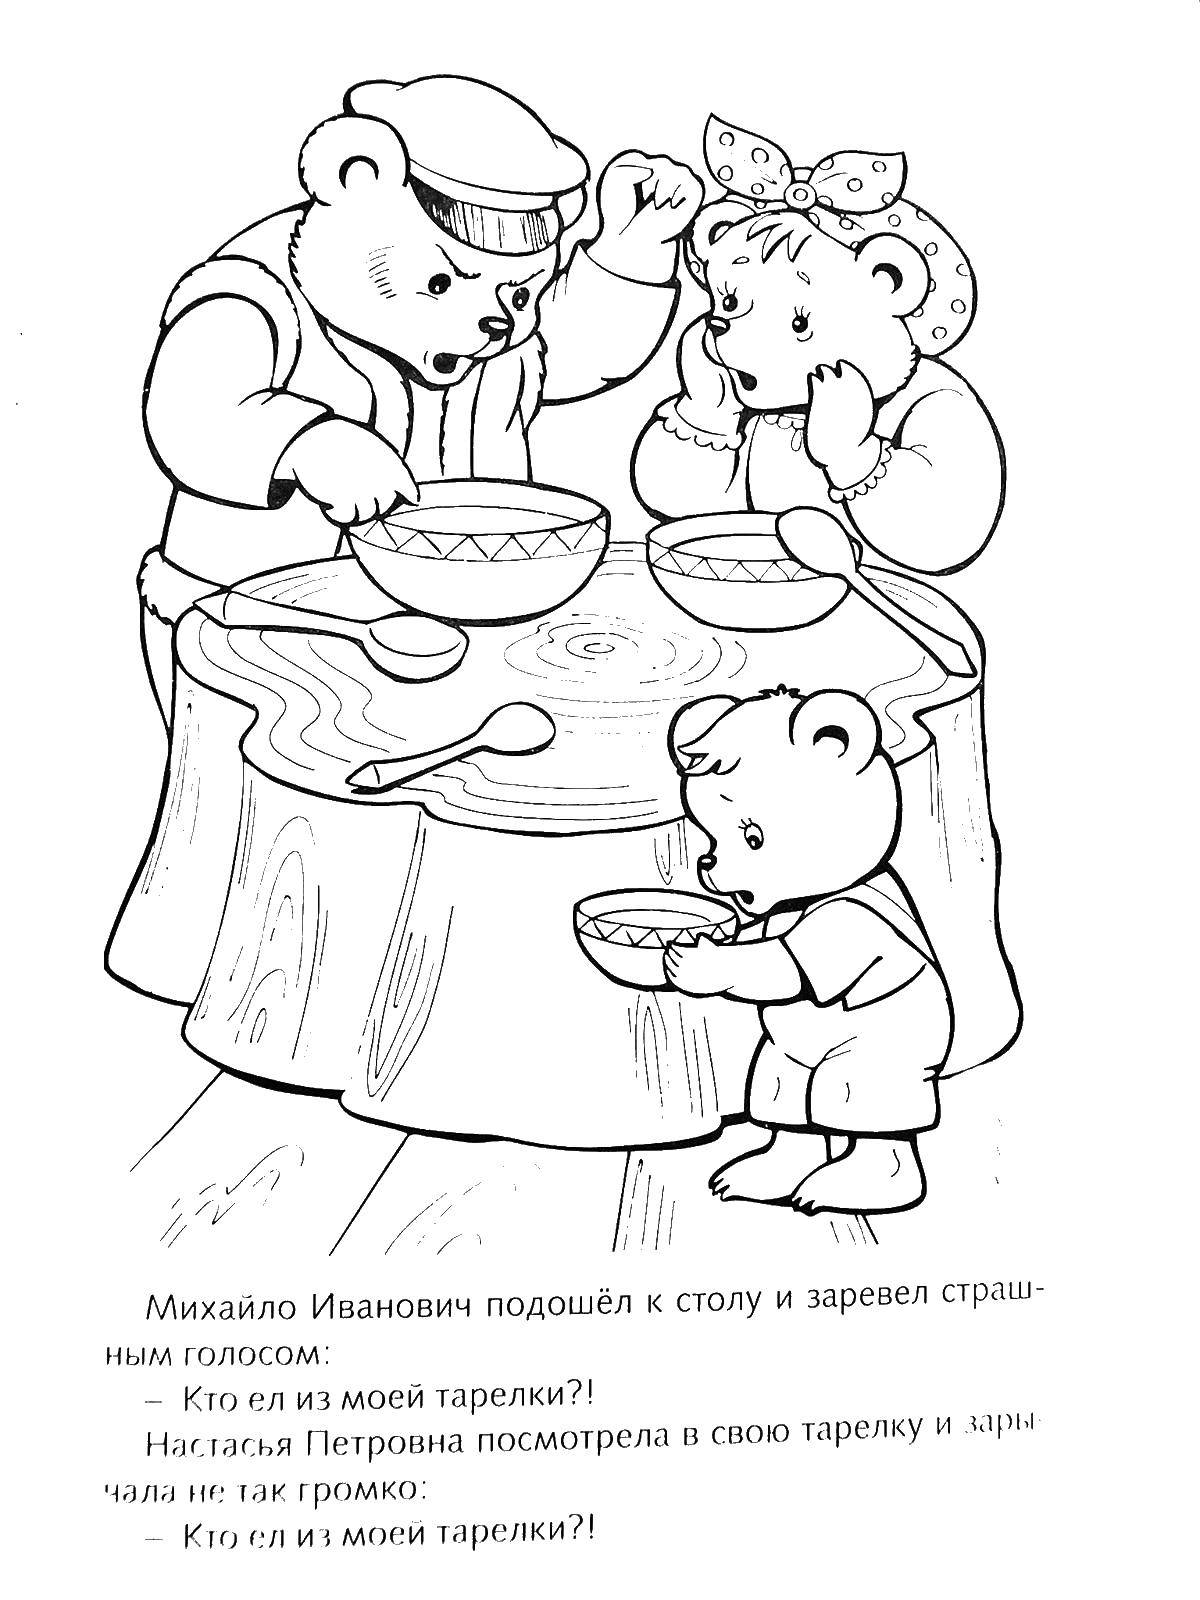 Три медведя Настасья Петровна